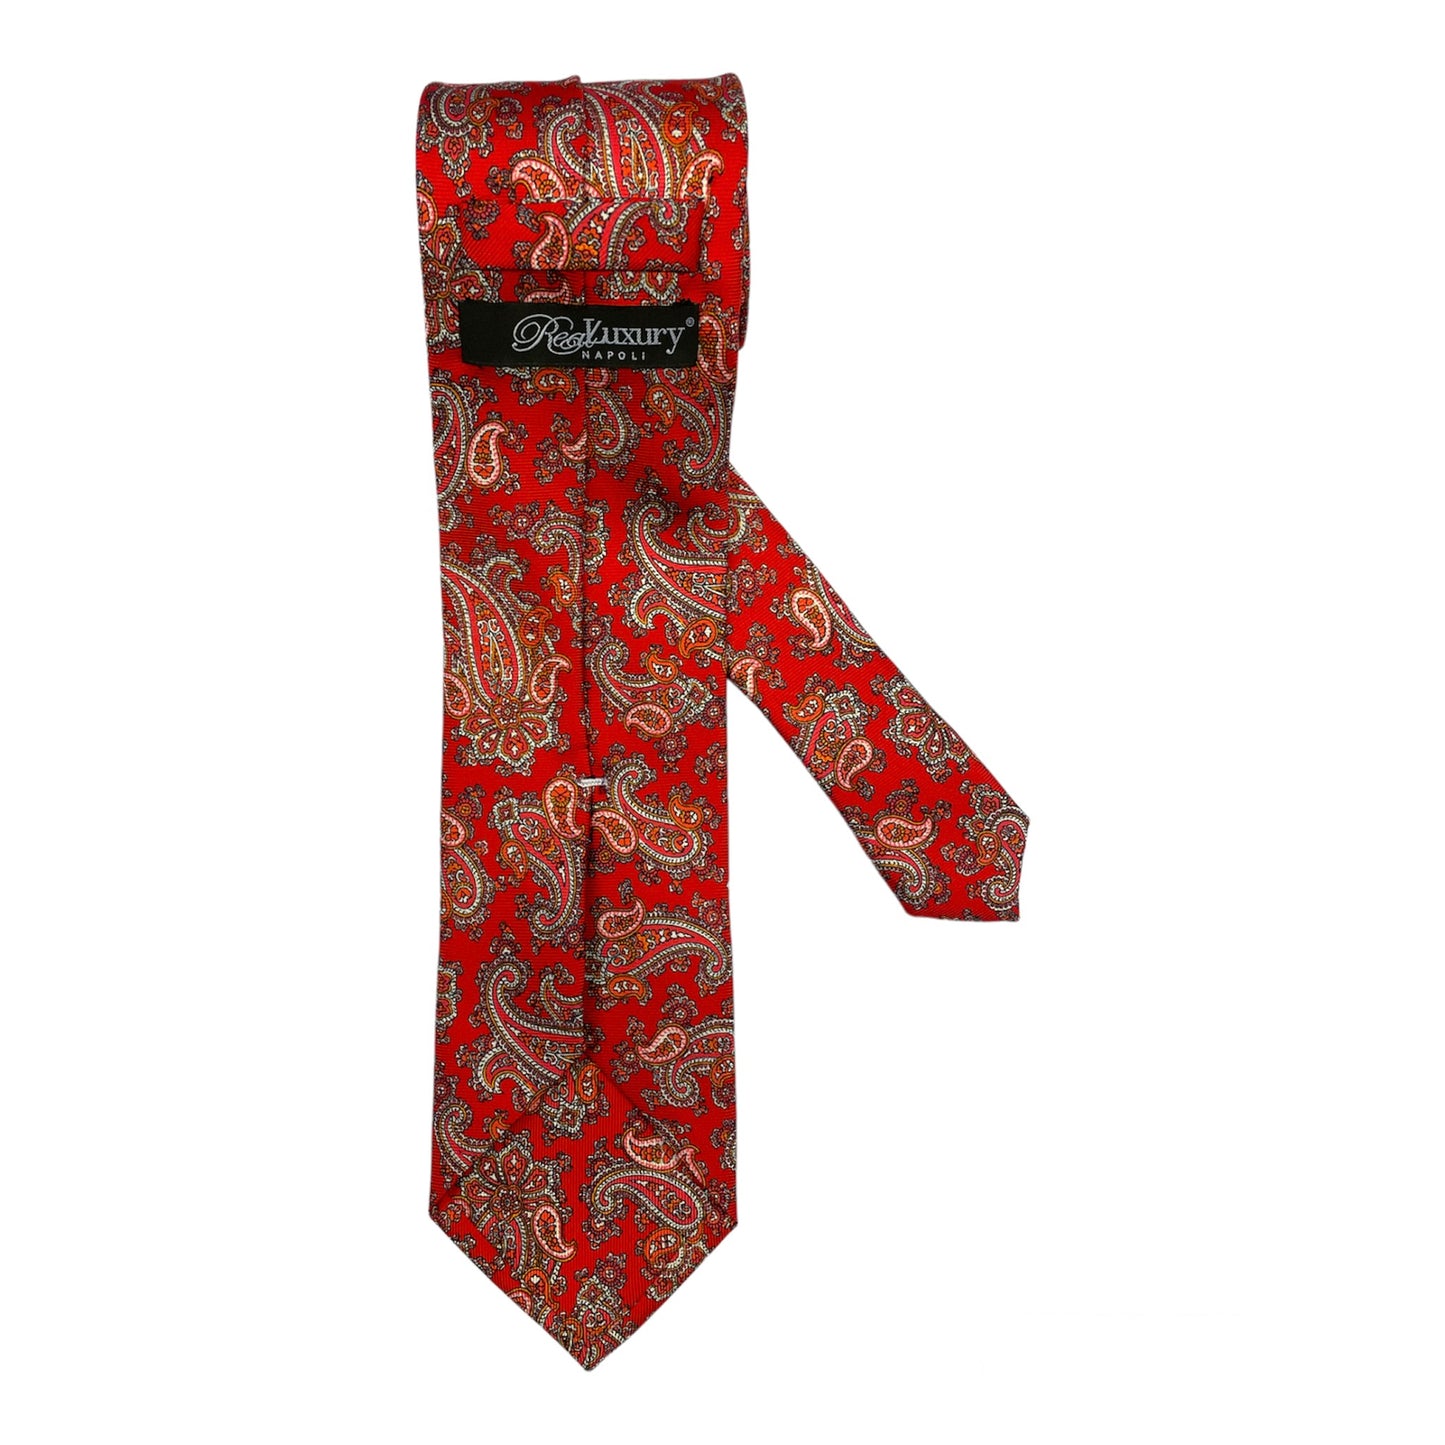 Cravatta seta rossa con paisley chiari